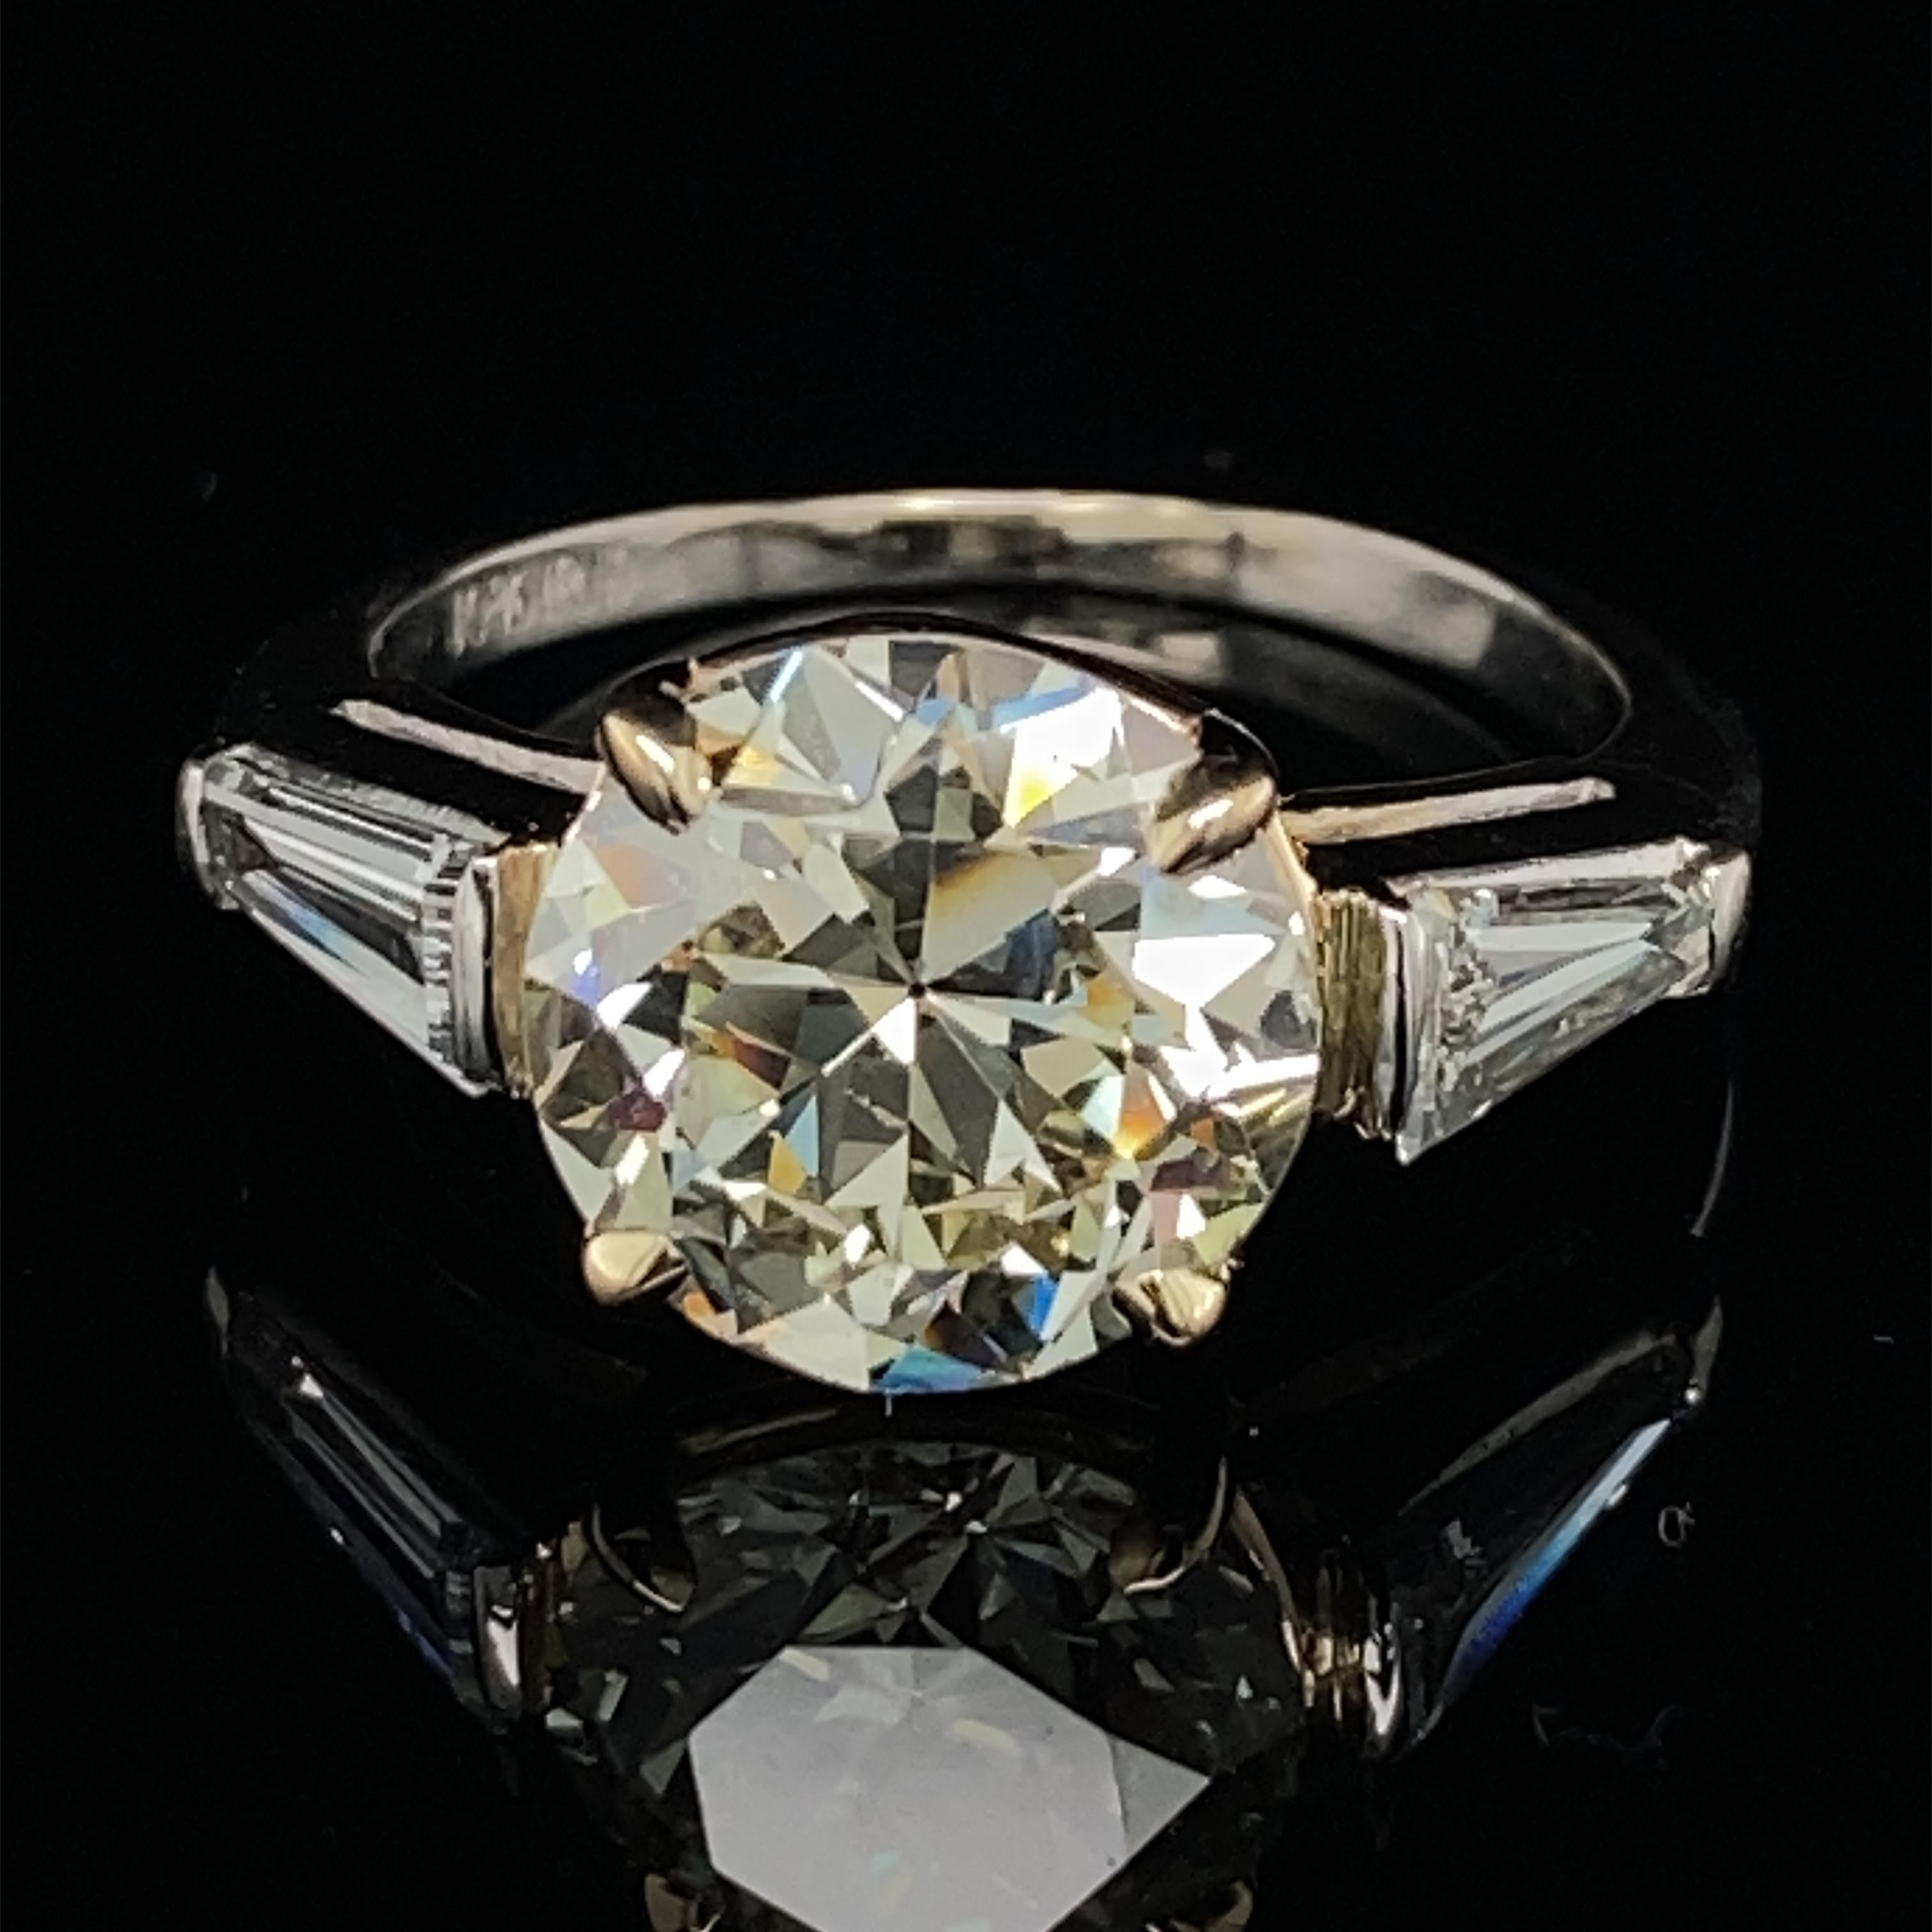 Certified 3.16 Carat Transitional Cut Diamond in Platinum & Gold 3-Stone Ring 2